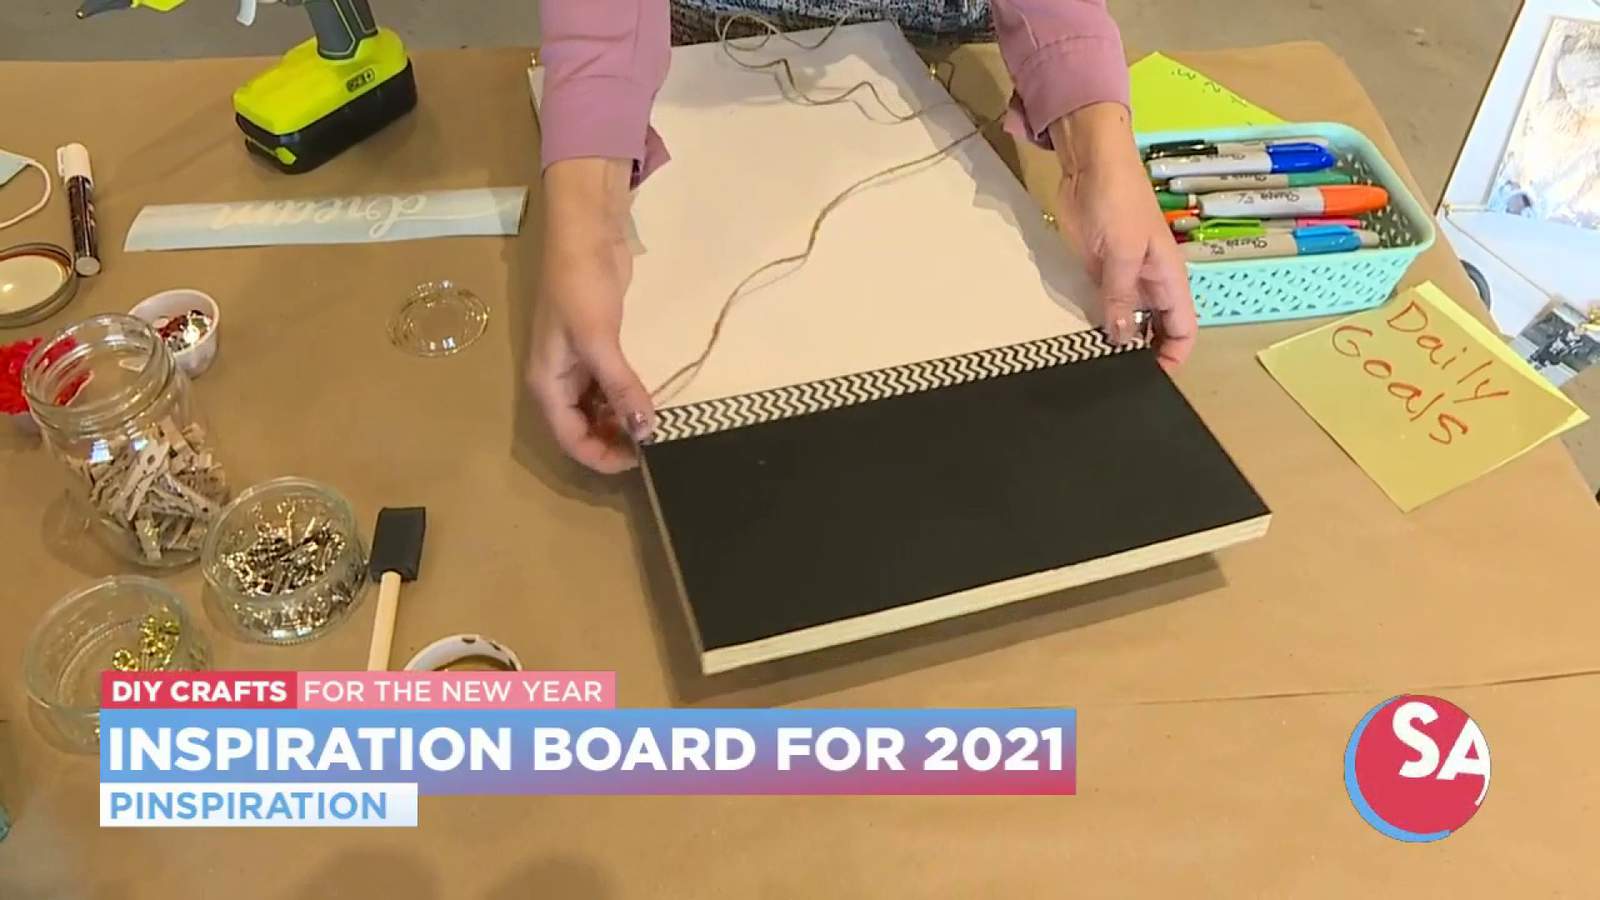 Get crafty in 2021 with a DIY vision board